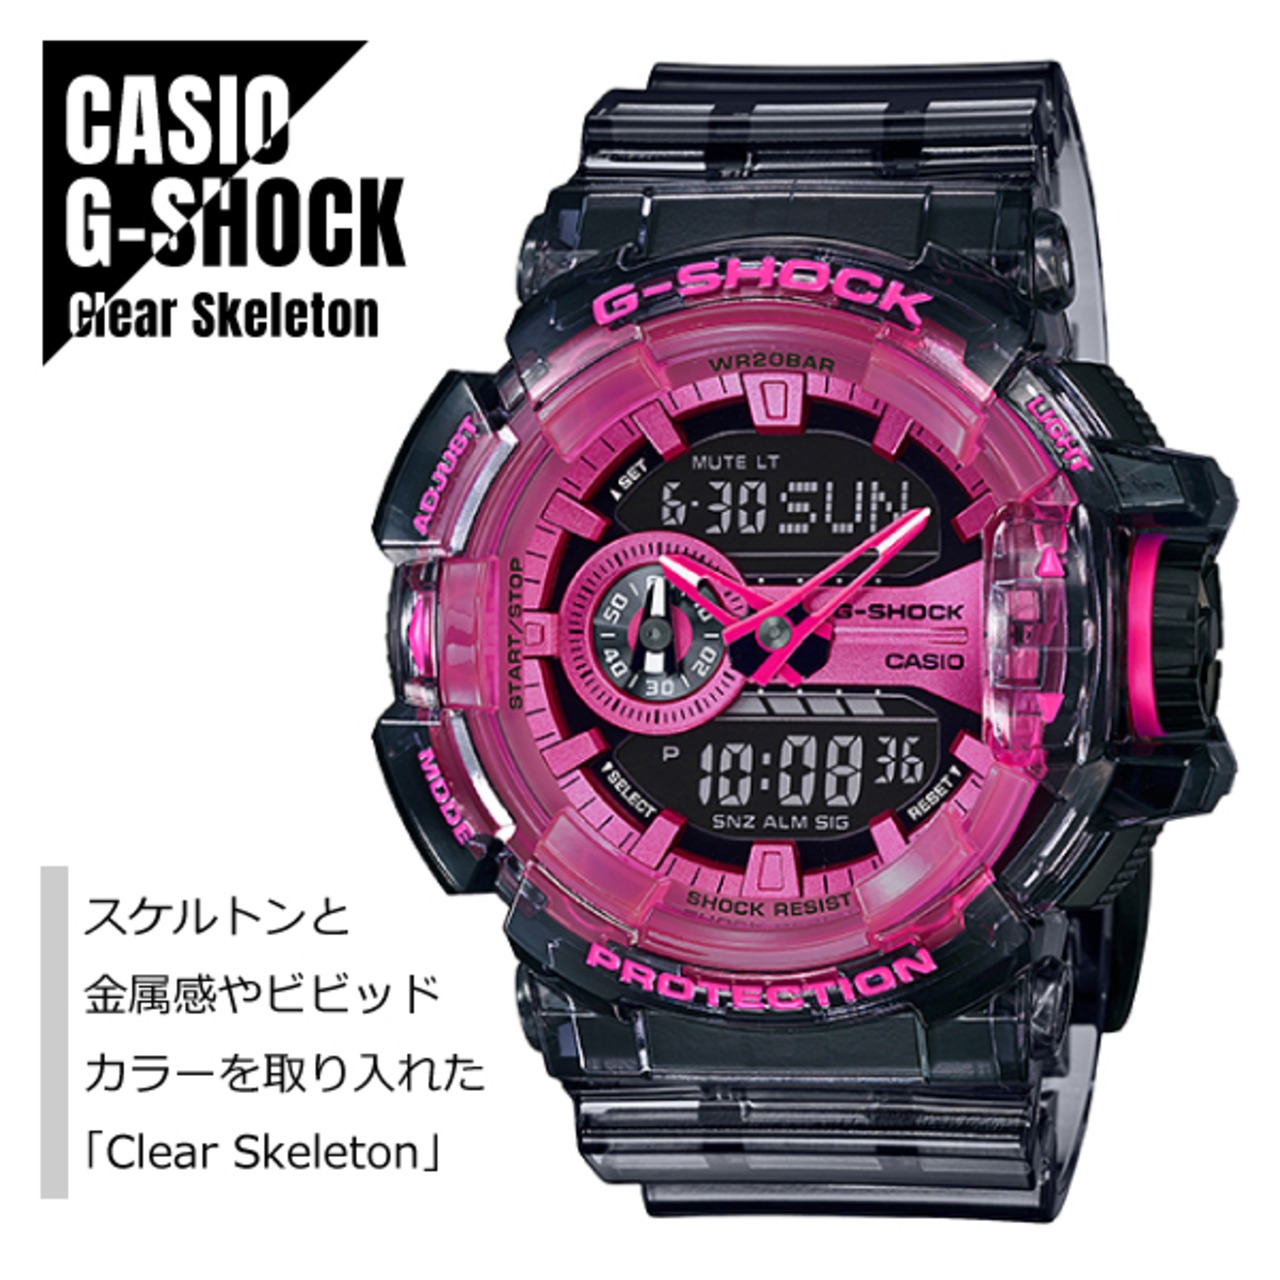 CASIO カシオ G-SHOCK Gショック Clear Skeleton クリアスケルトン アナデジ GA-400SK-1A4 腕時計 メンズ